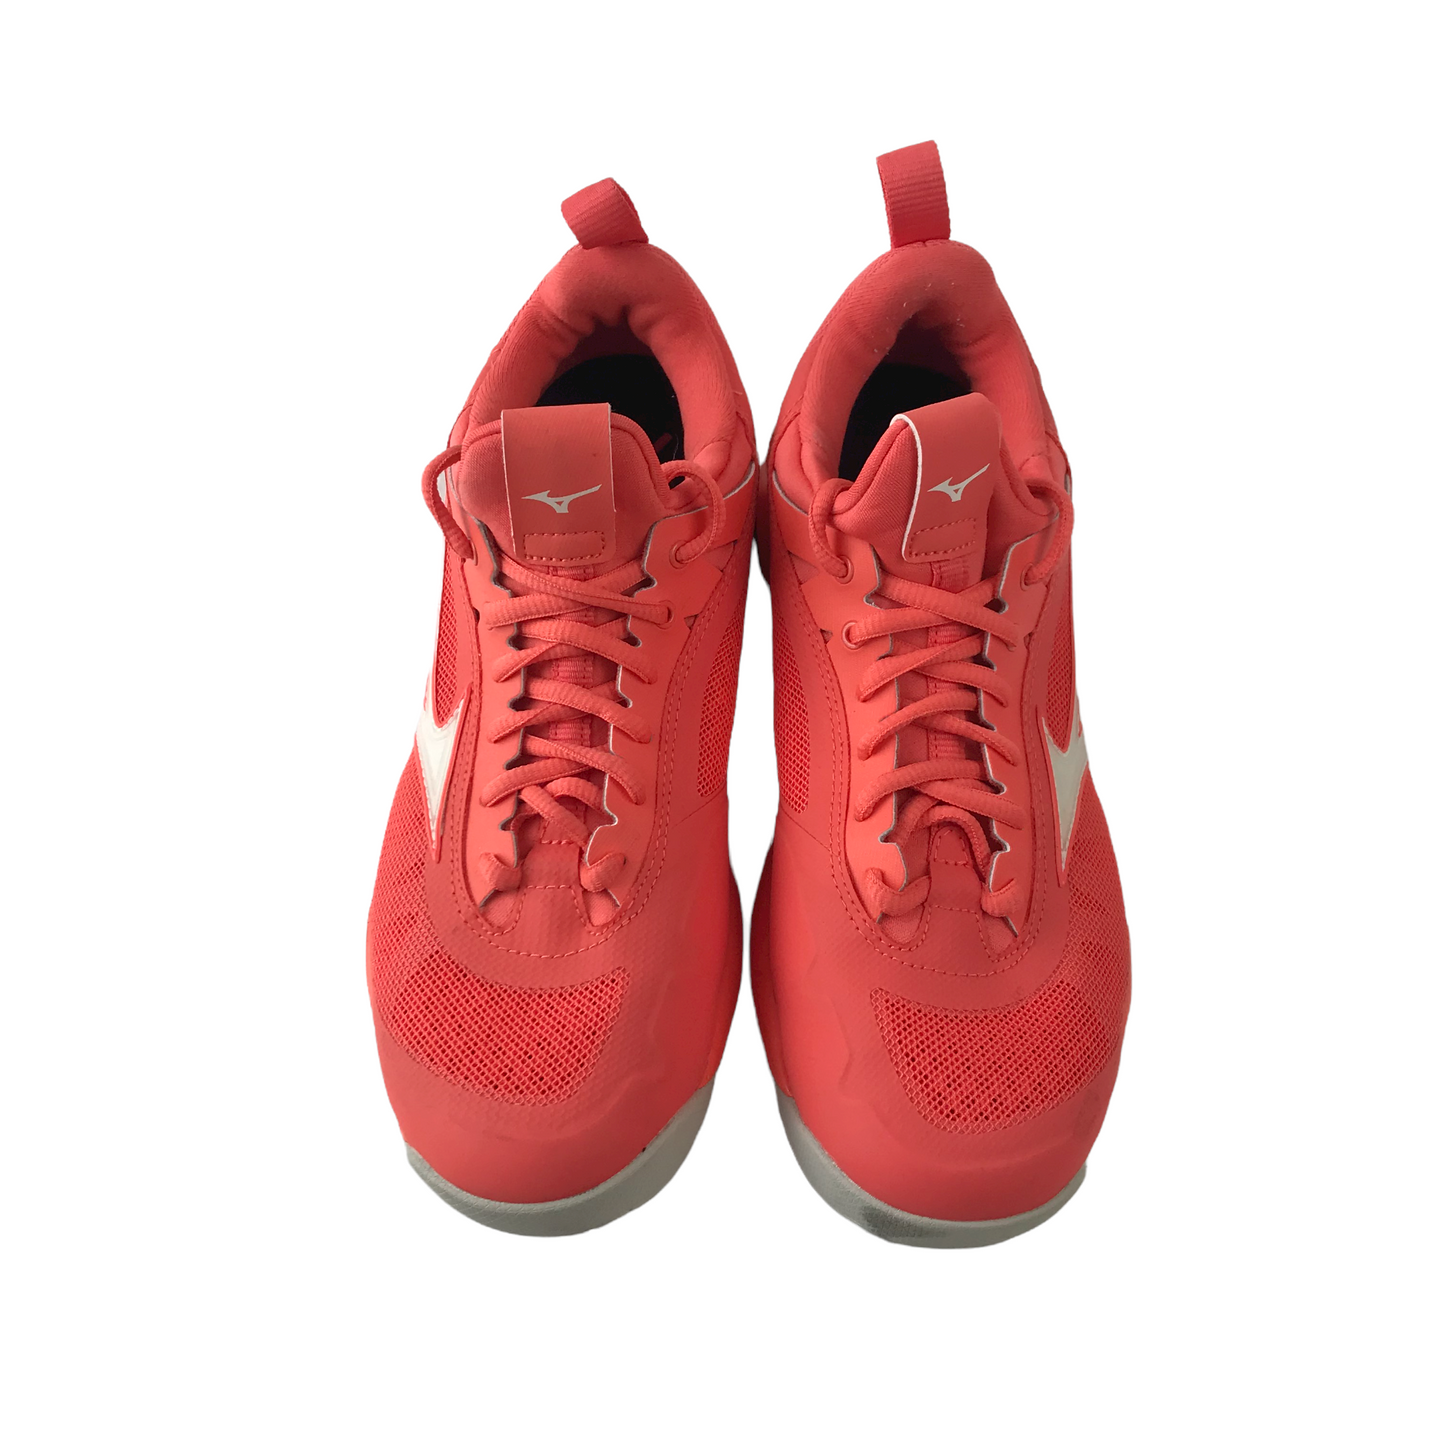 Mizuno Wave Luminous Orange Volleyball Trainers Shoe Size 6